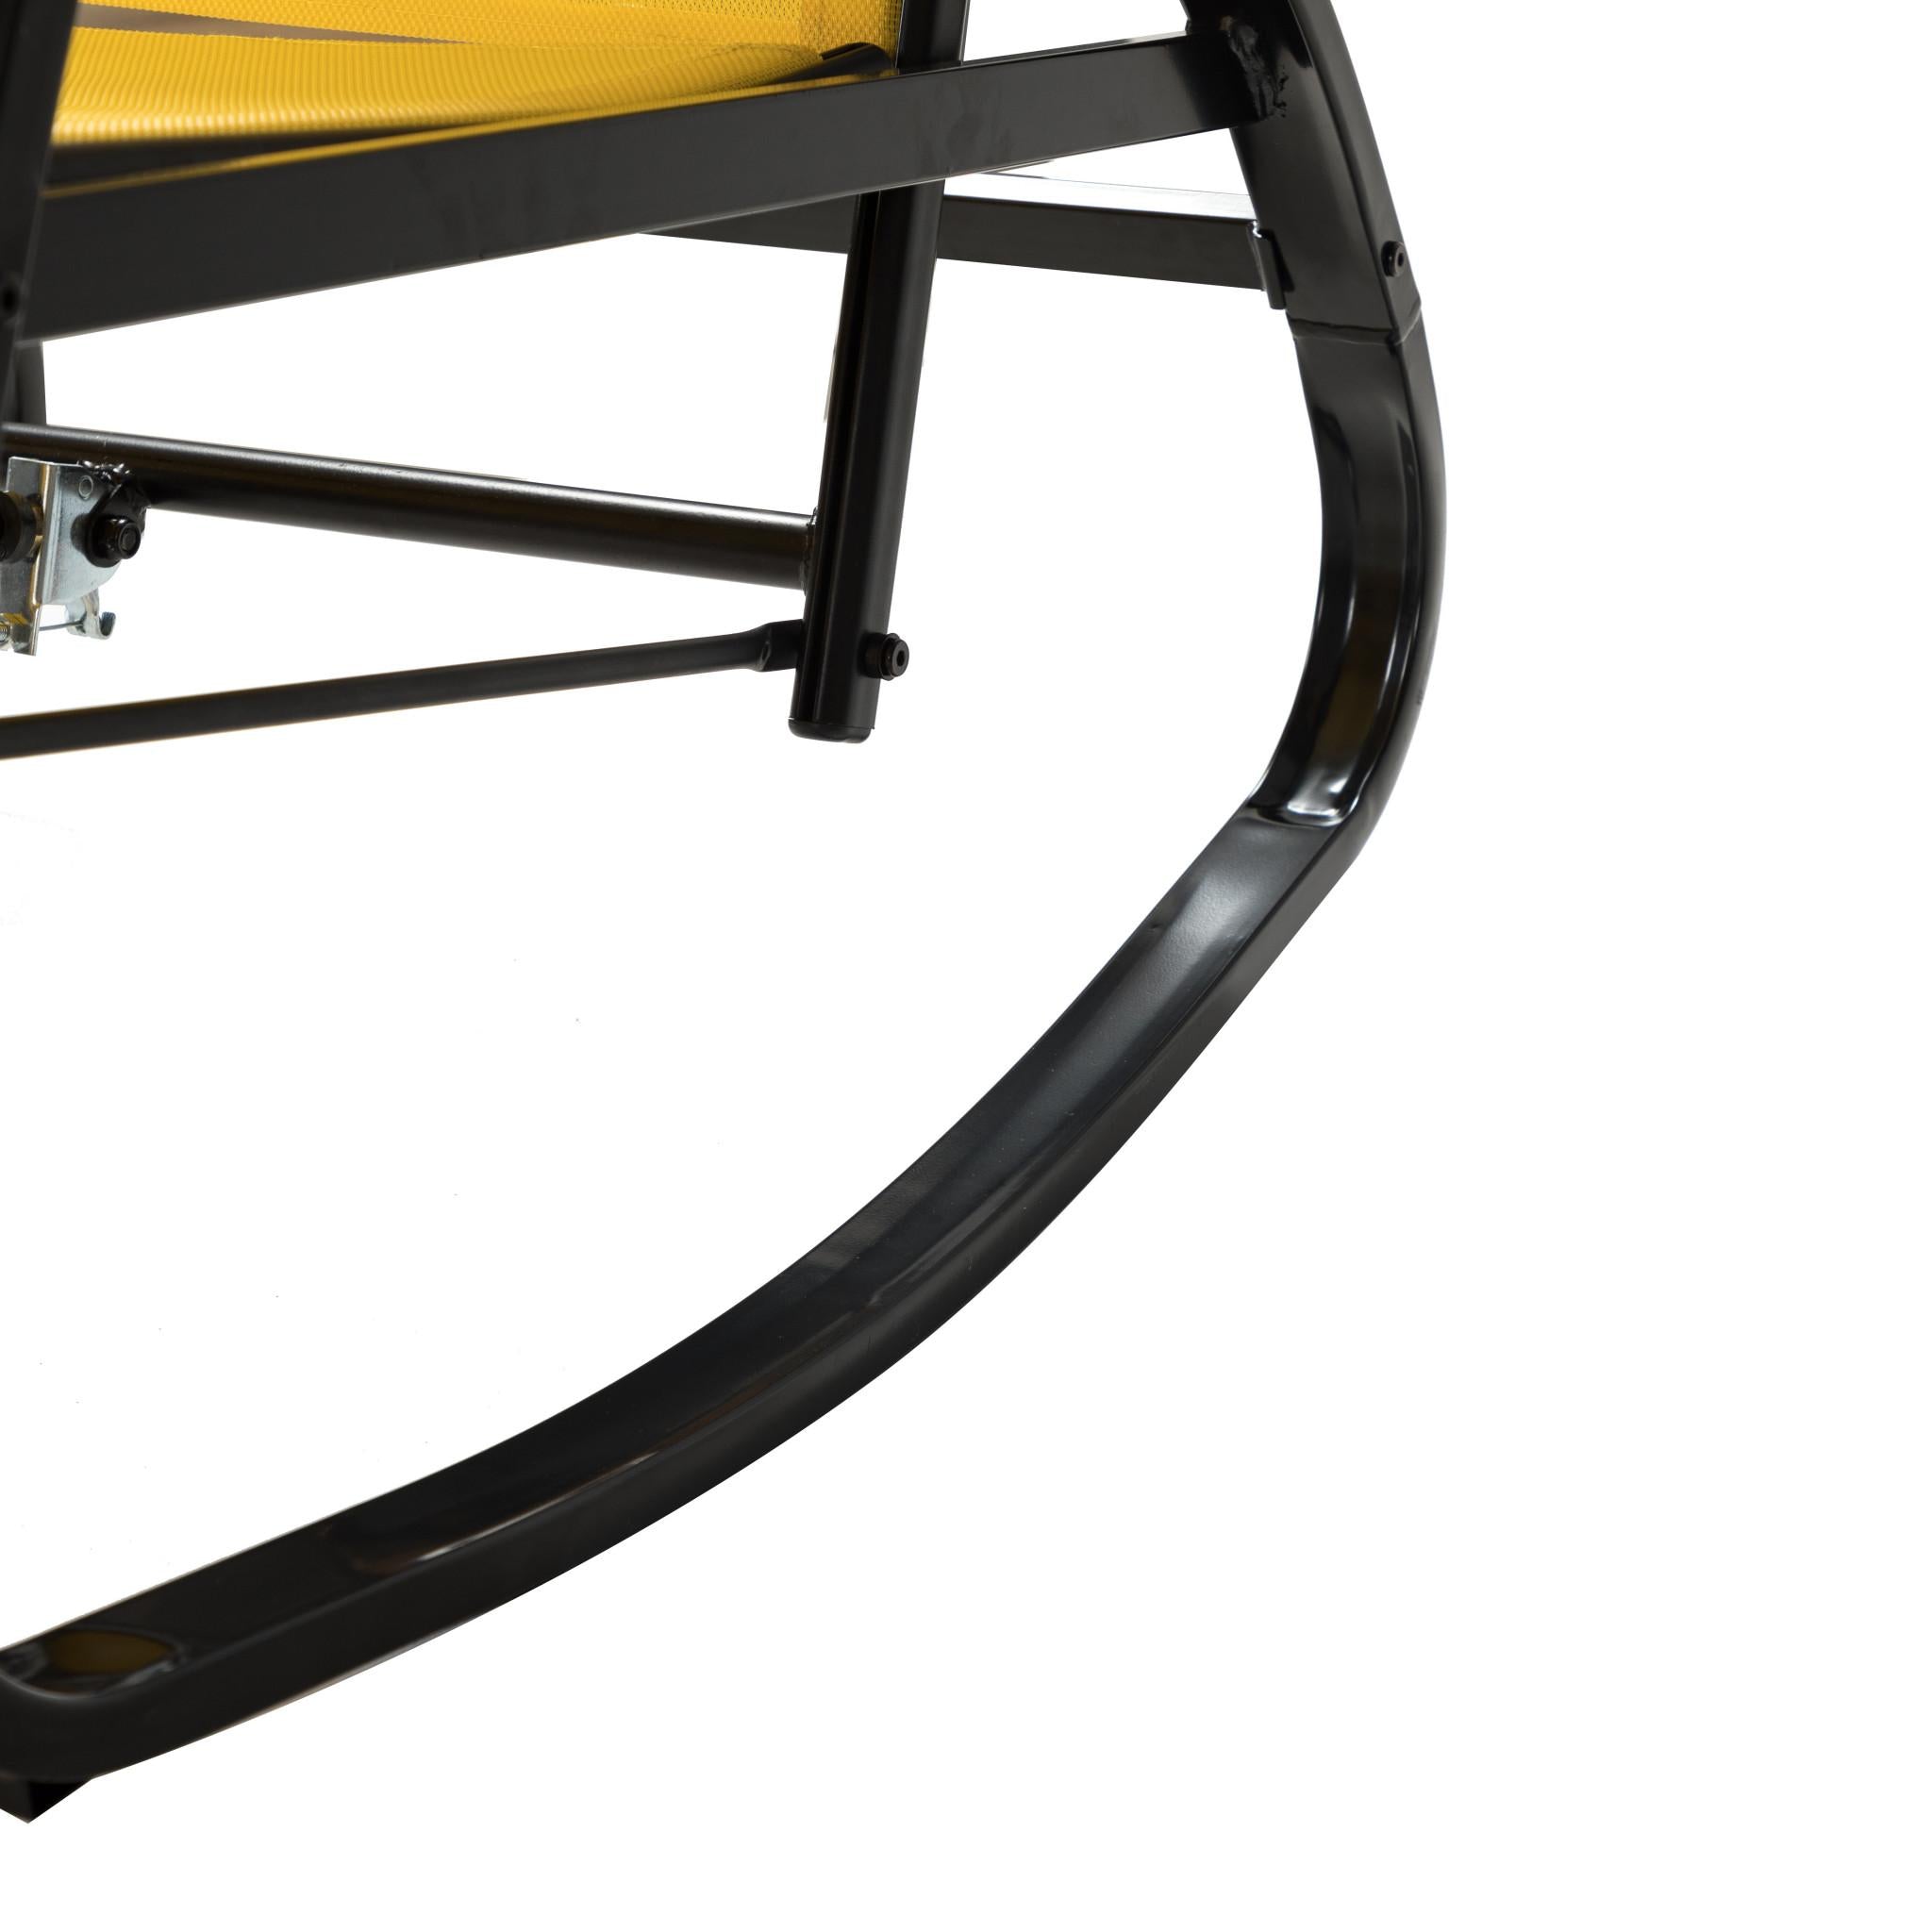 Yellow Outdoor Adjustable Rocking Recliner Chair